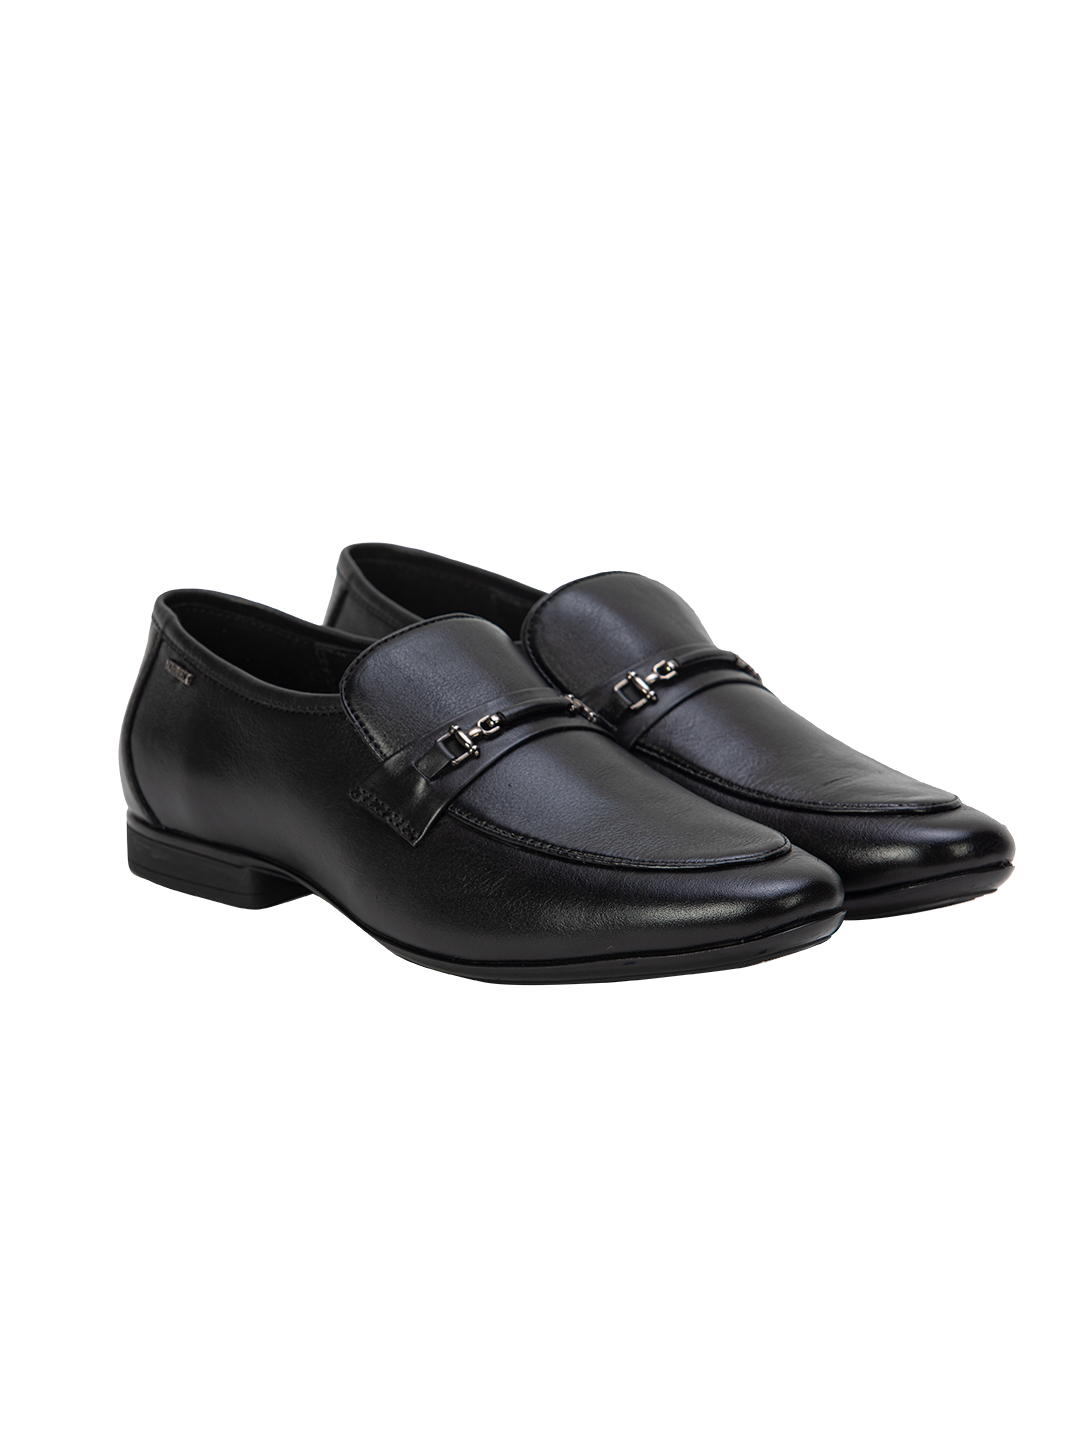 Buy Von Wellx Germany Comfort Black Glib Shoes Online in Meerut